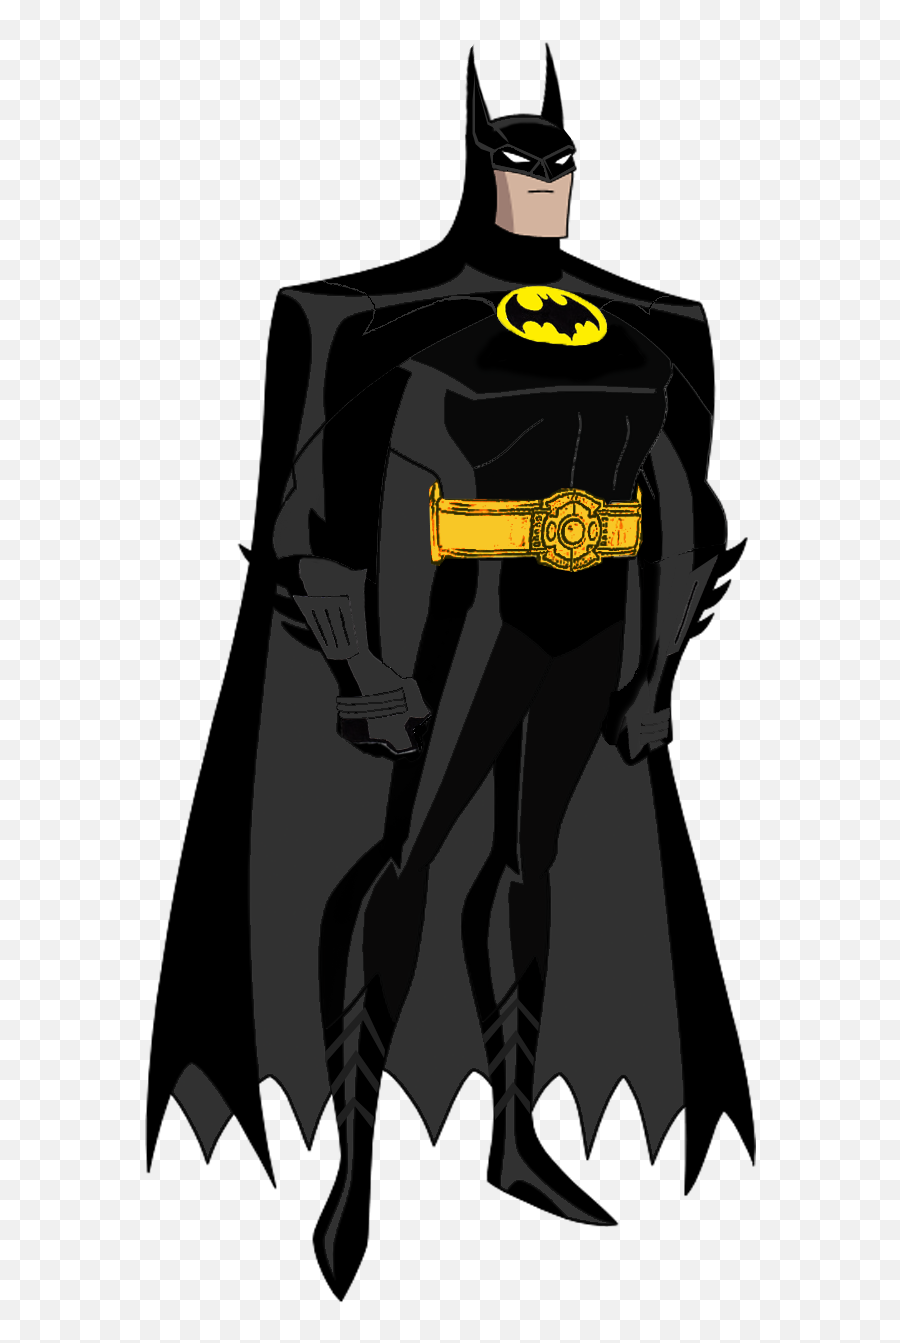 Download Batman Png Image For Free - Batman Animated Series All Black Suit Emoji,Batman Png